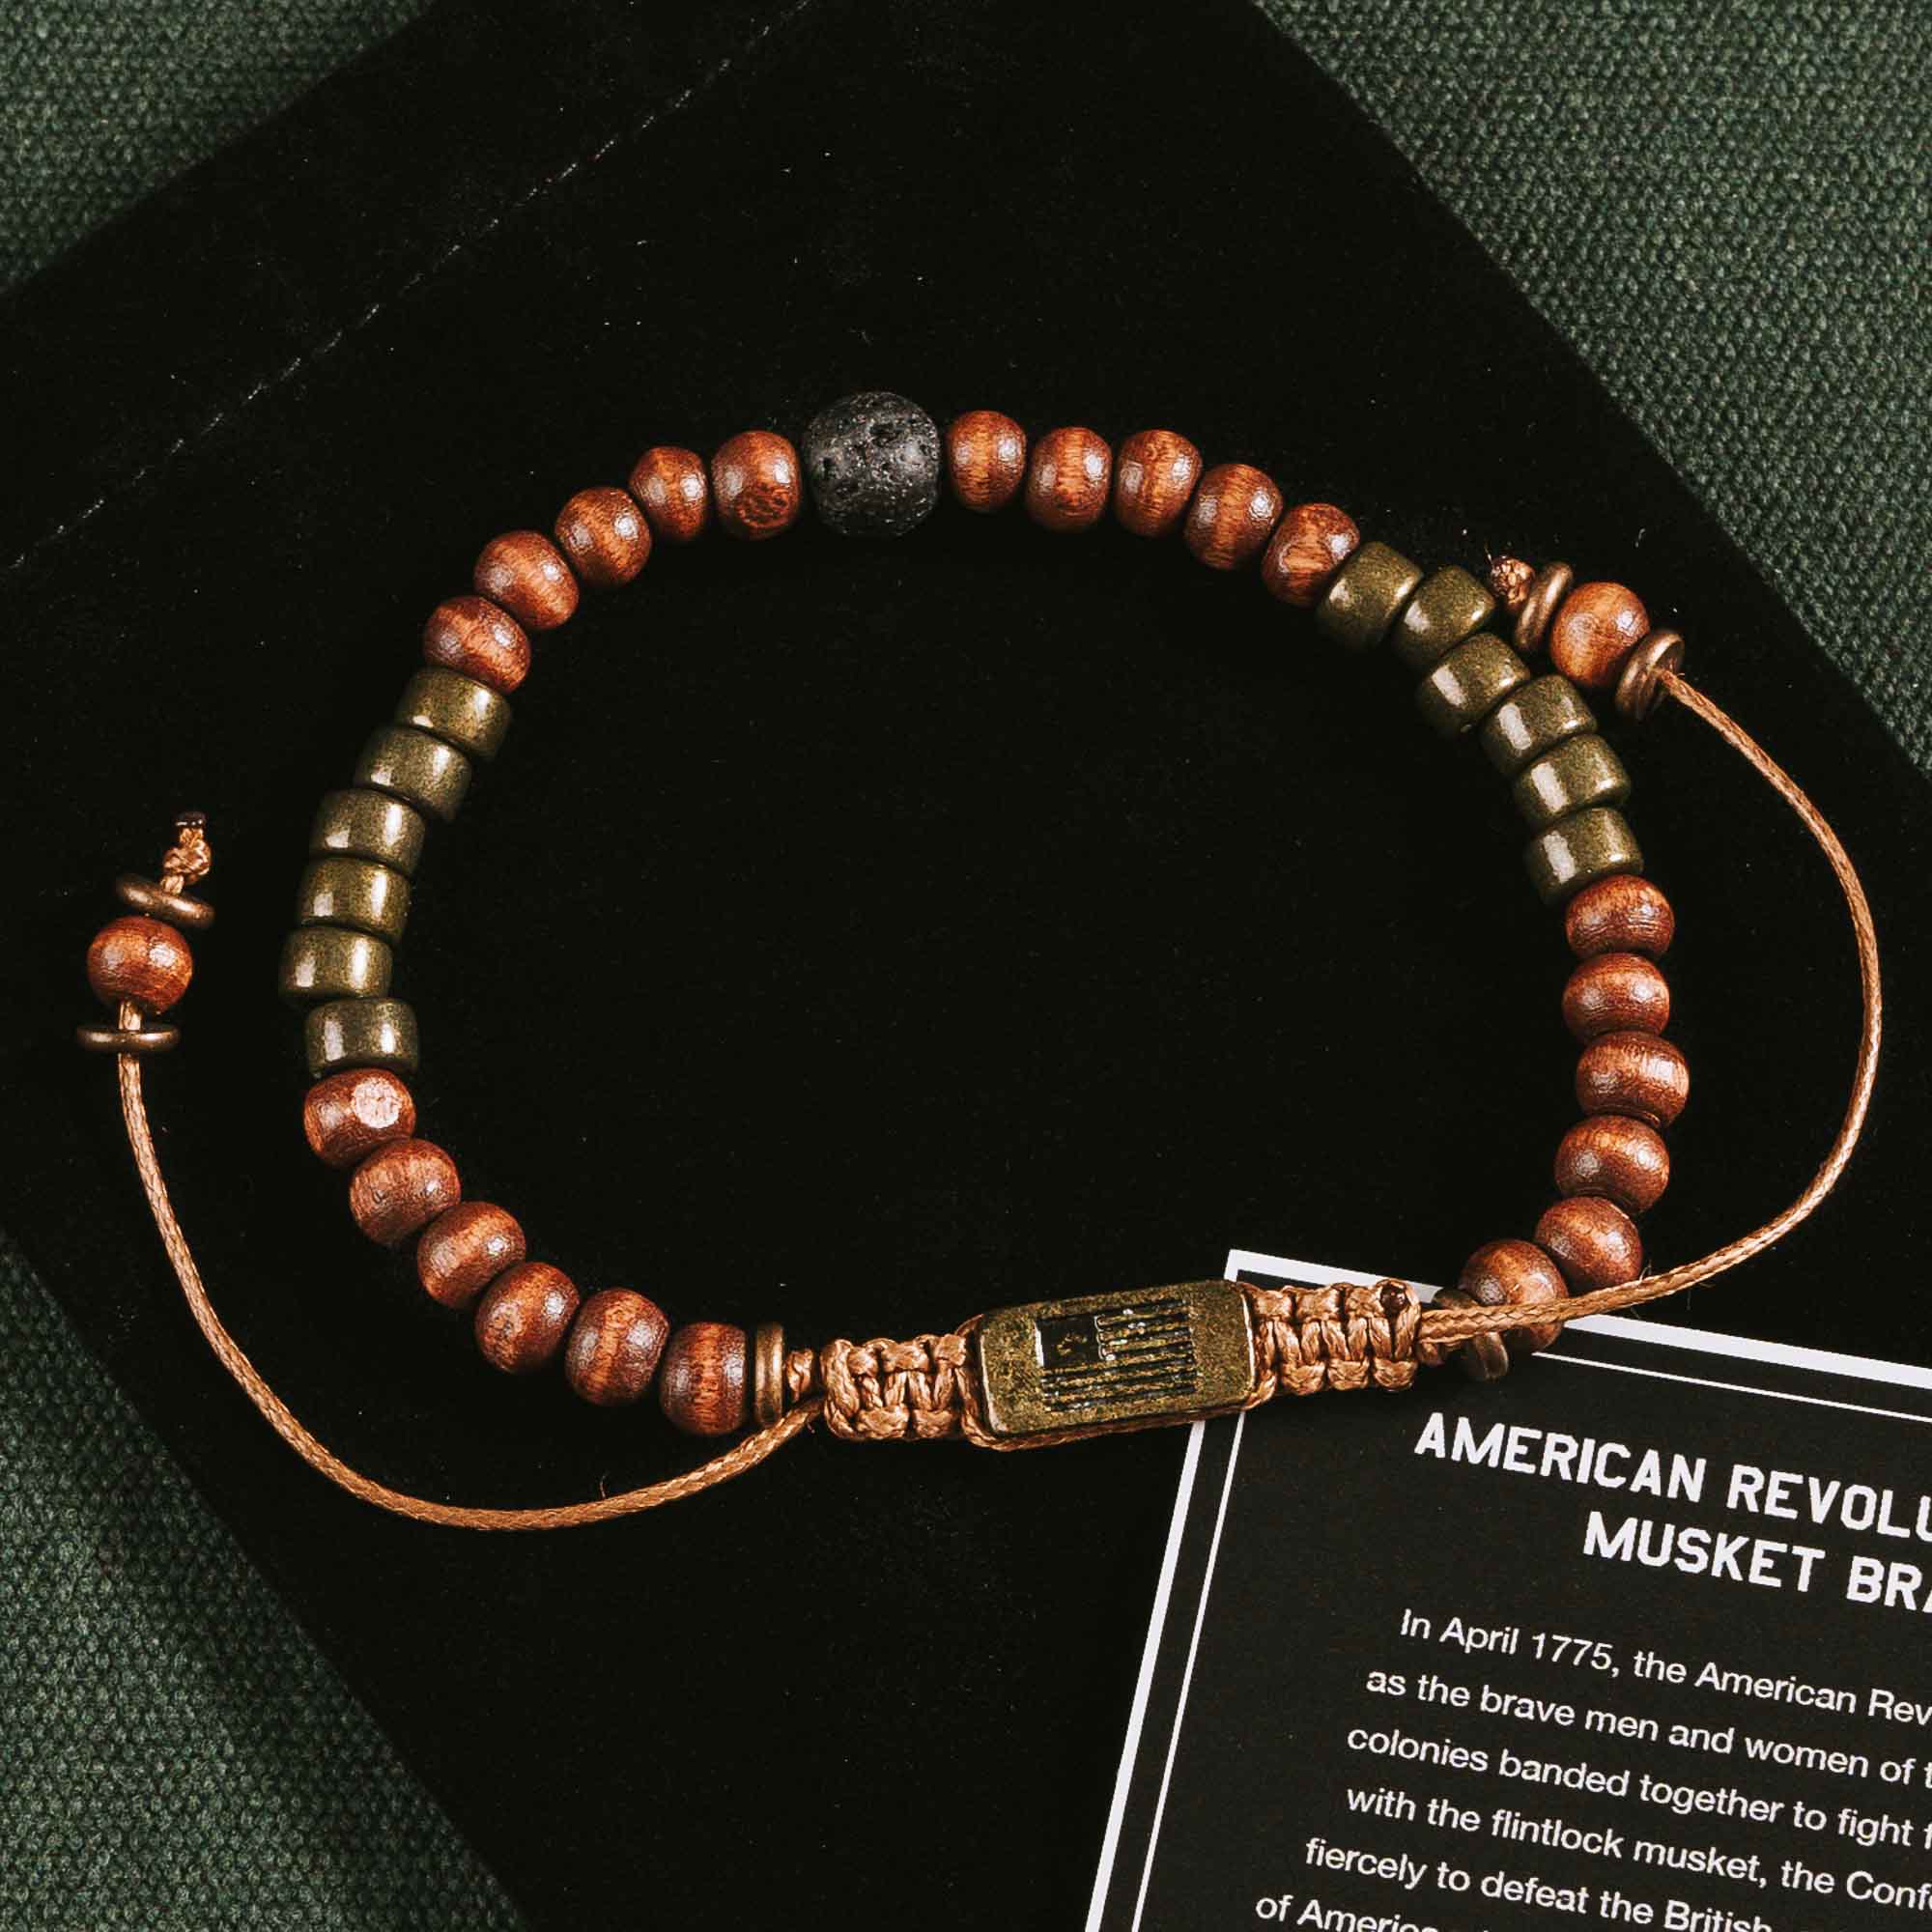 Special Offer -Don't Tread Revolution Bracelet Set - Don't Tread on Me & American Revolutionary War Musket Bracelets